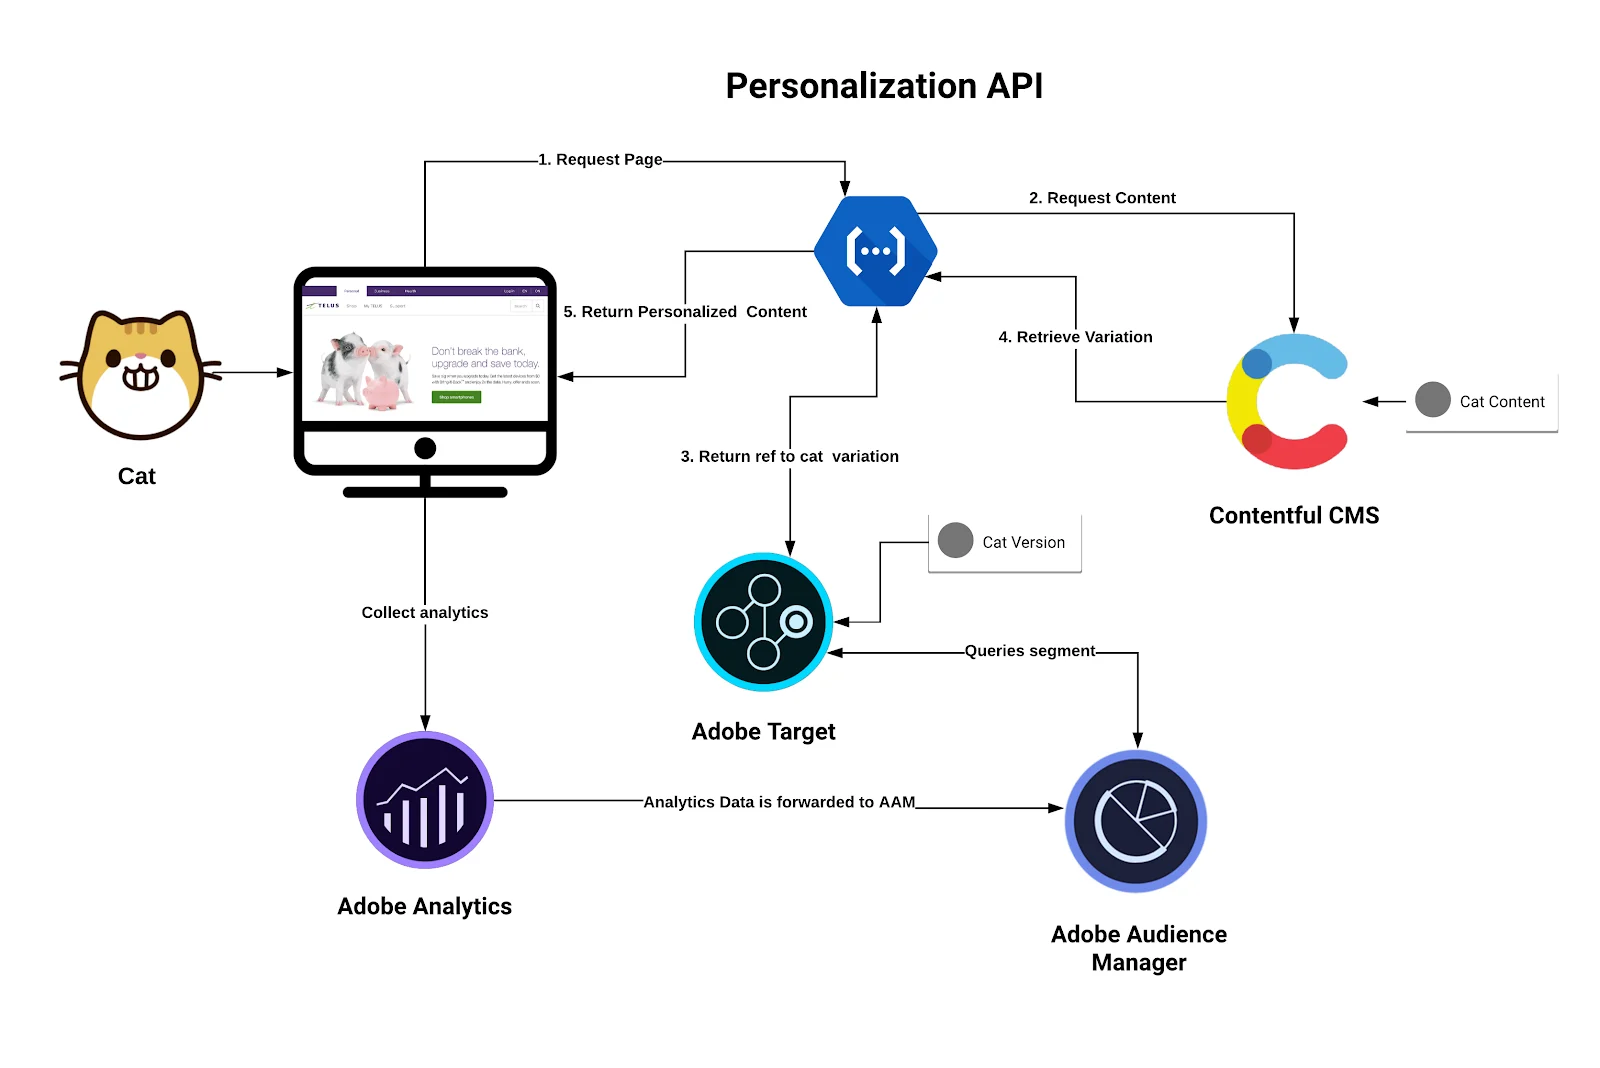 Personalization API